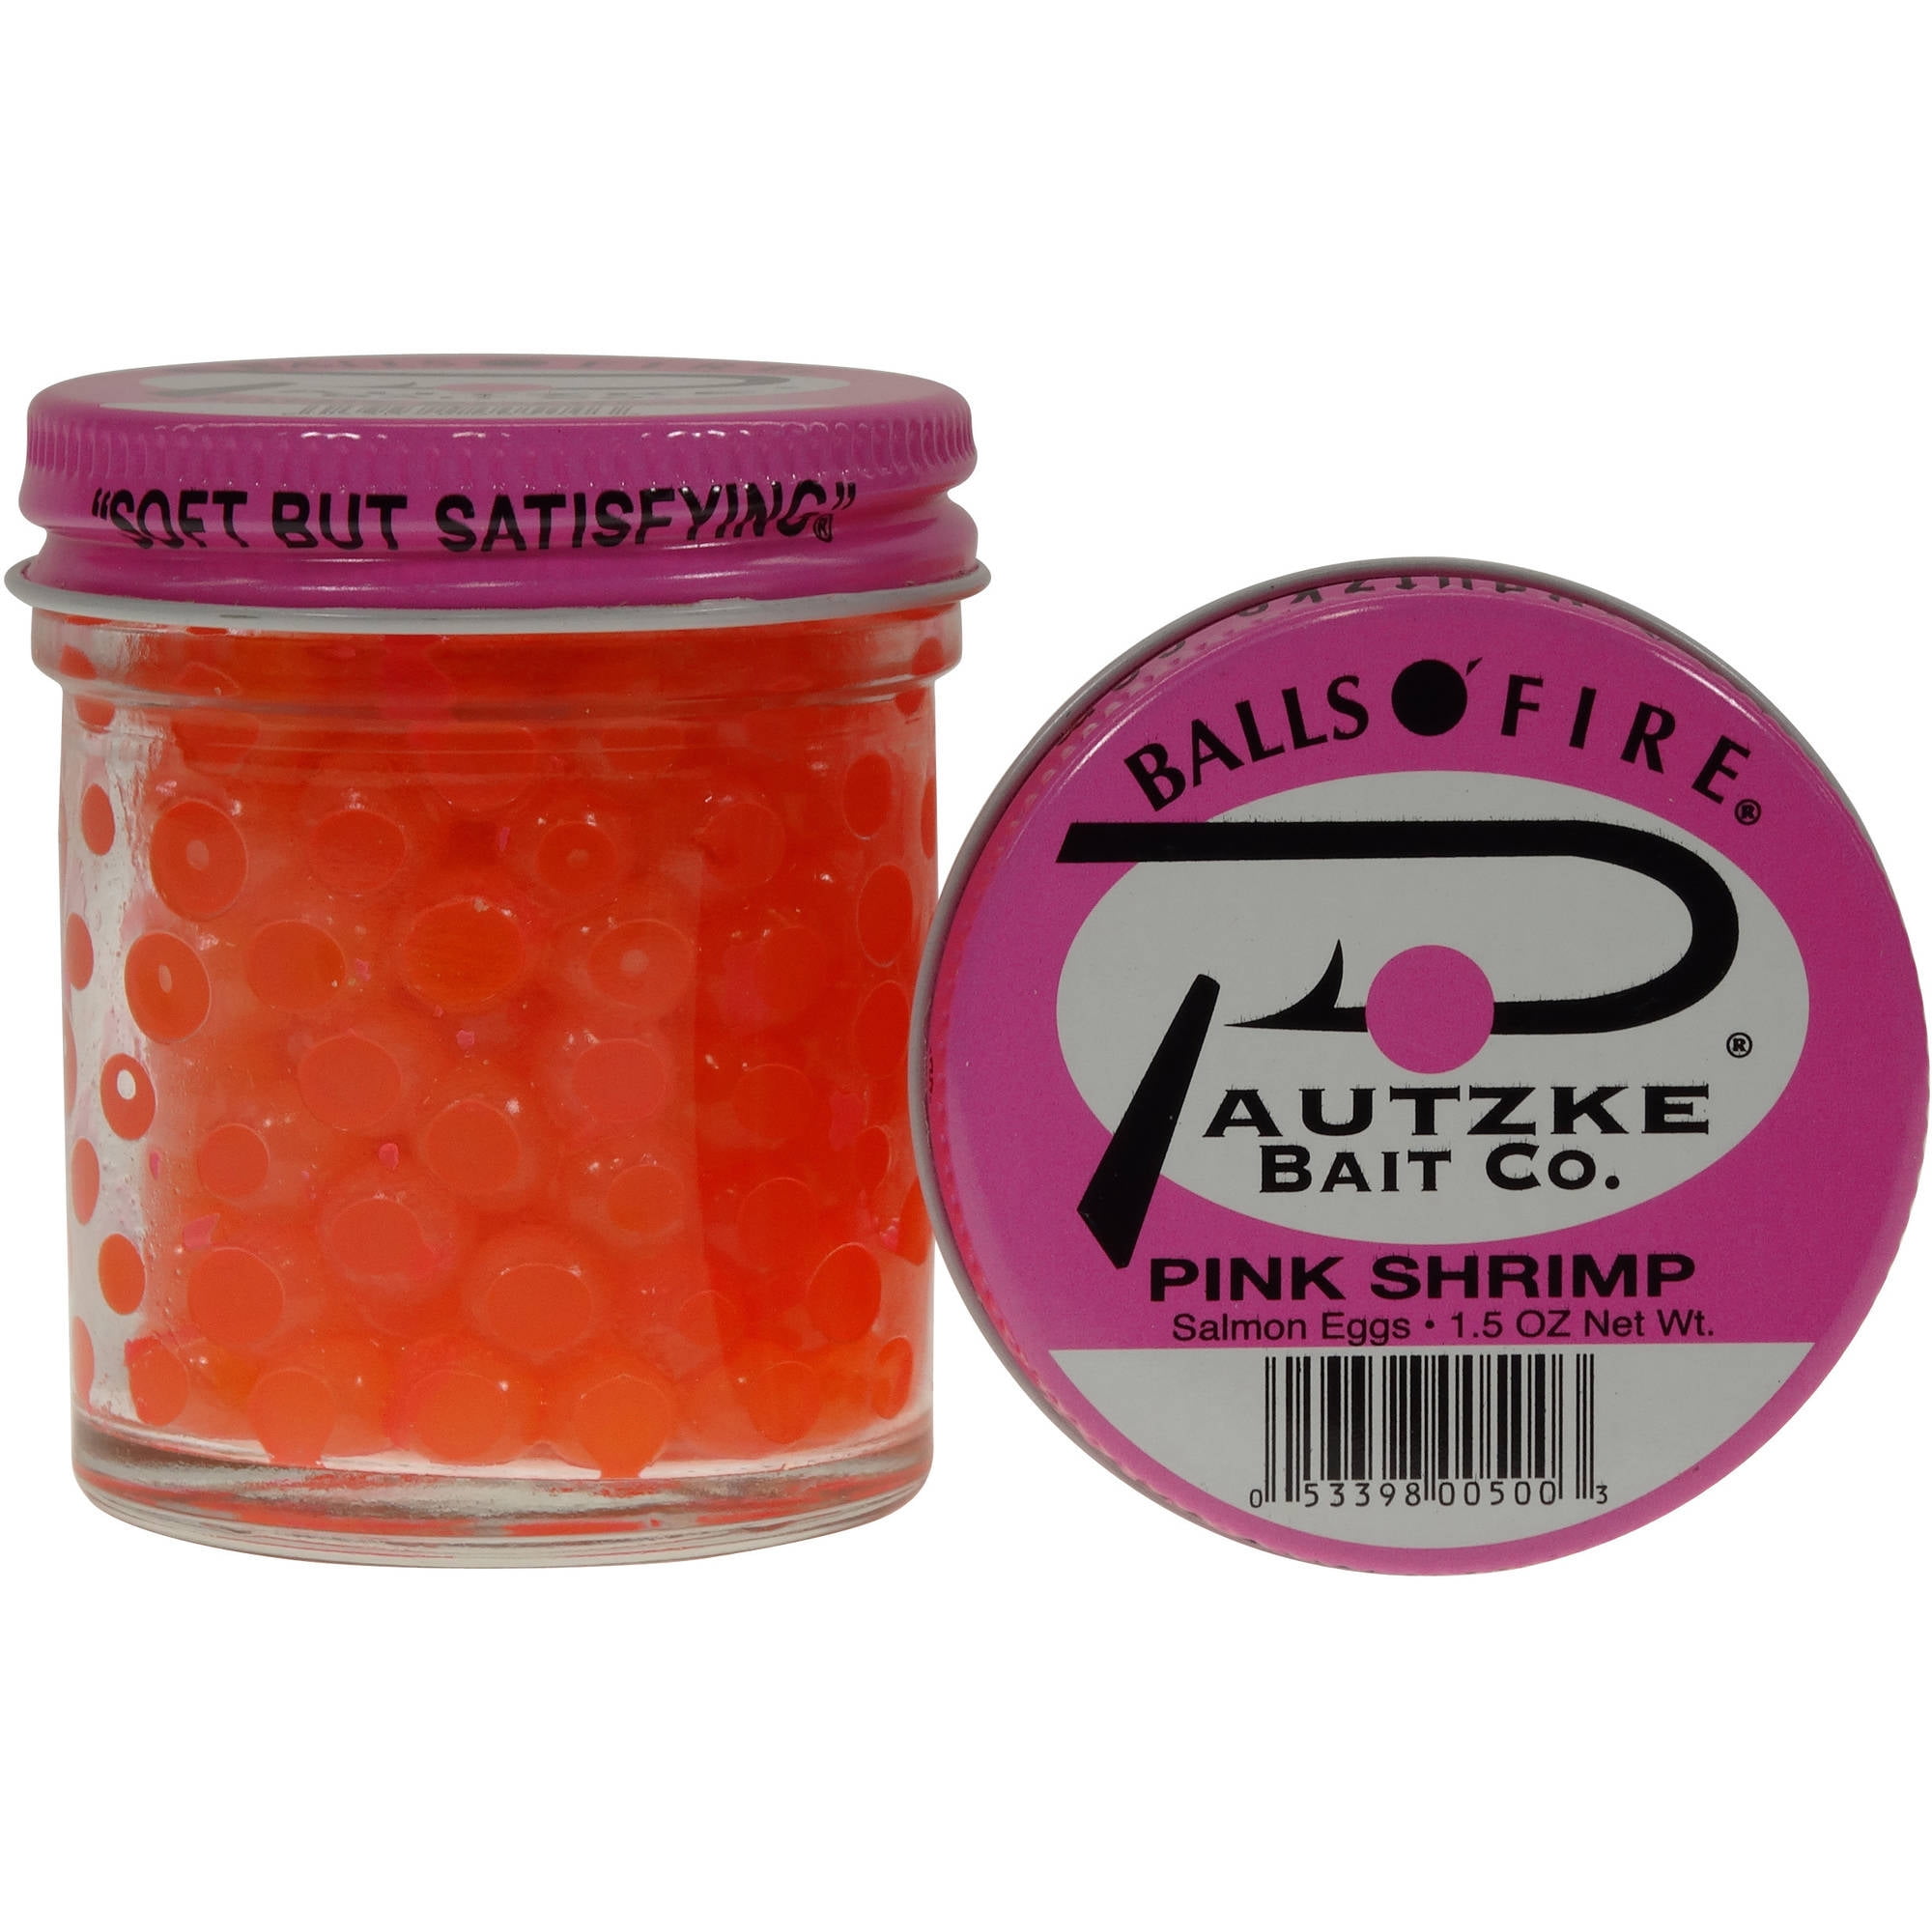 Pautzke Balls O' Fire Salmon Eggs – Pink Shrimp 1 oz 